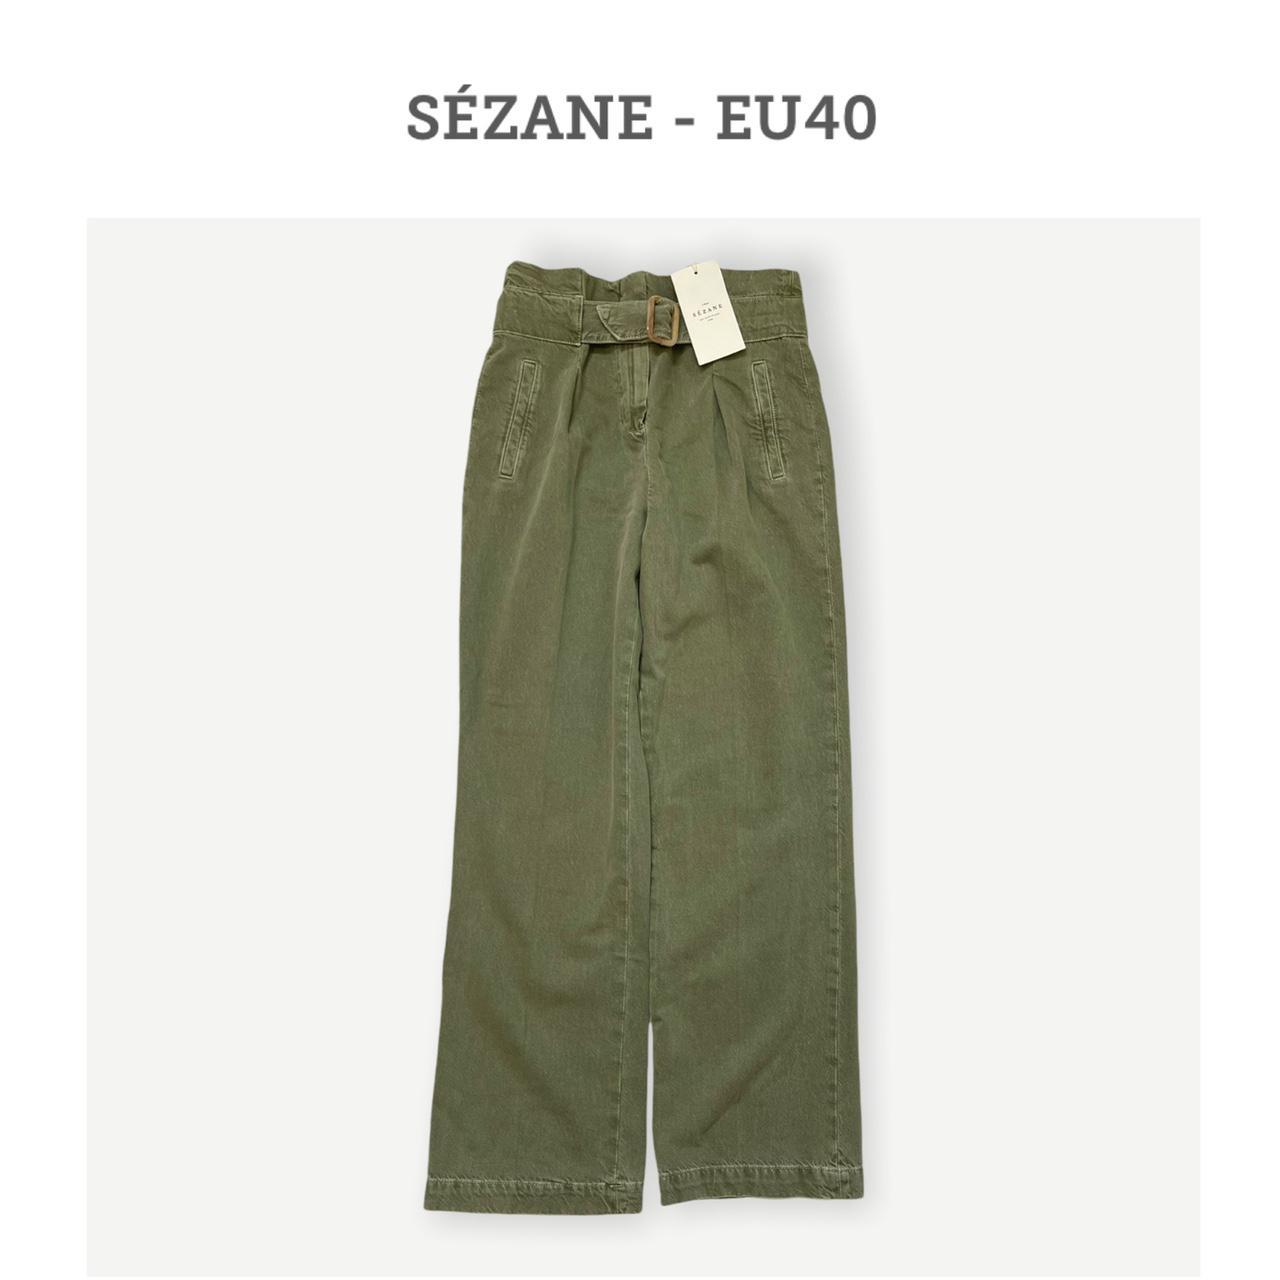 Sézane Women's Green and Khaki Trousers